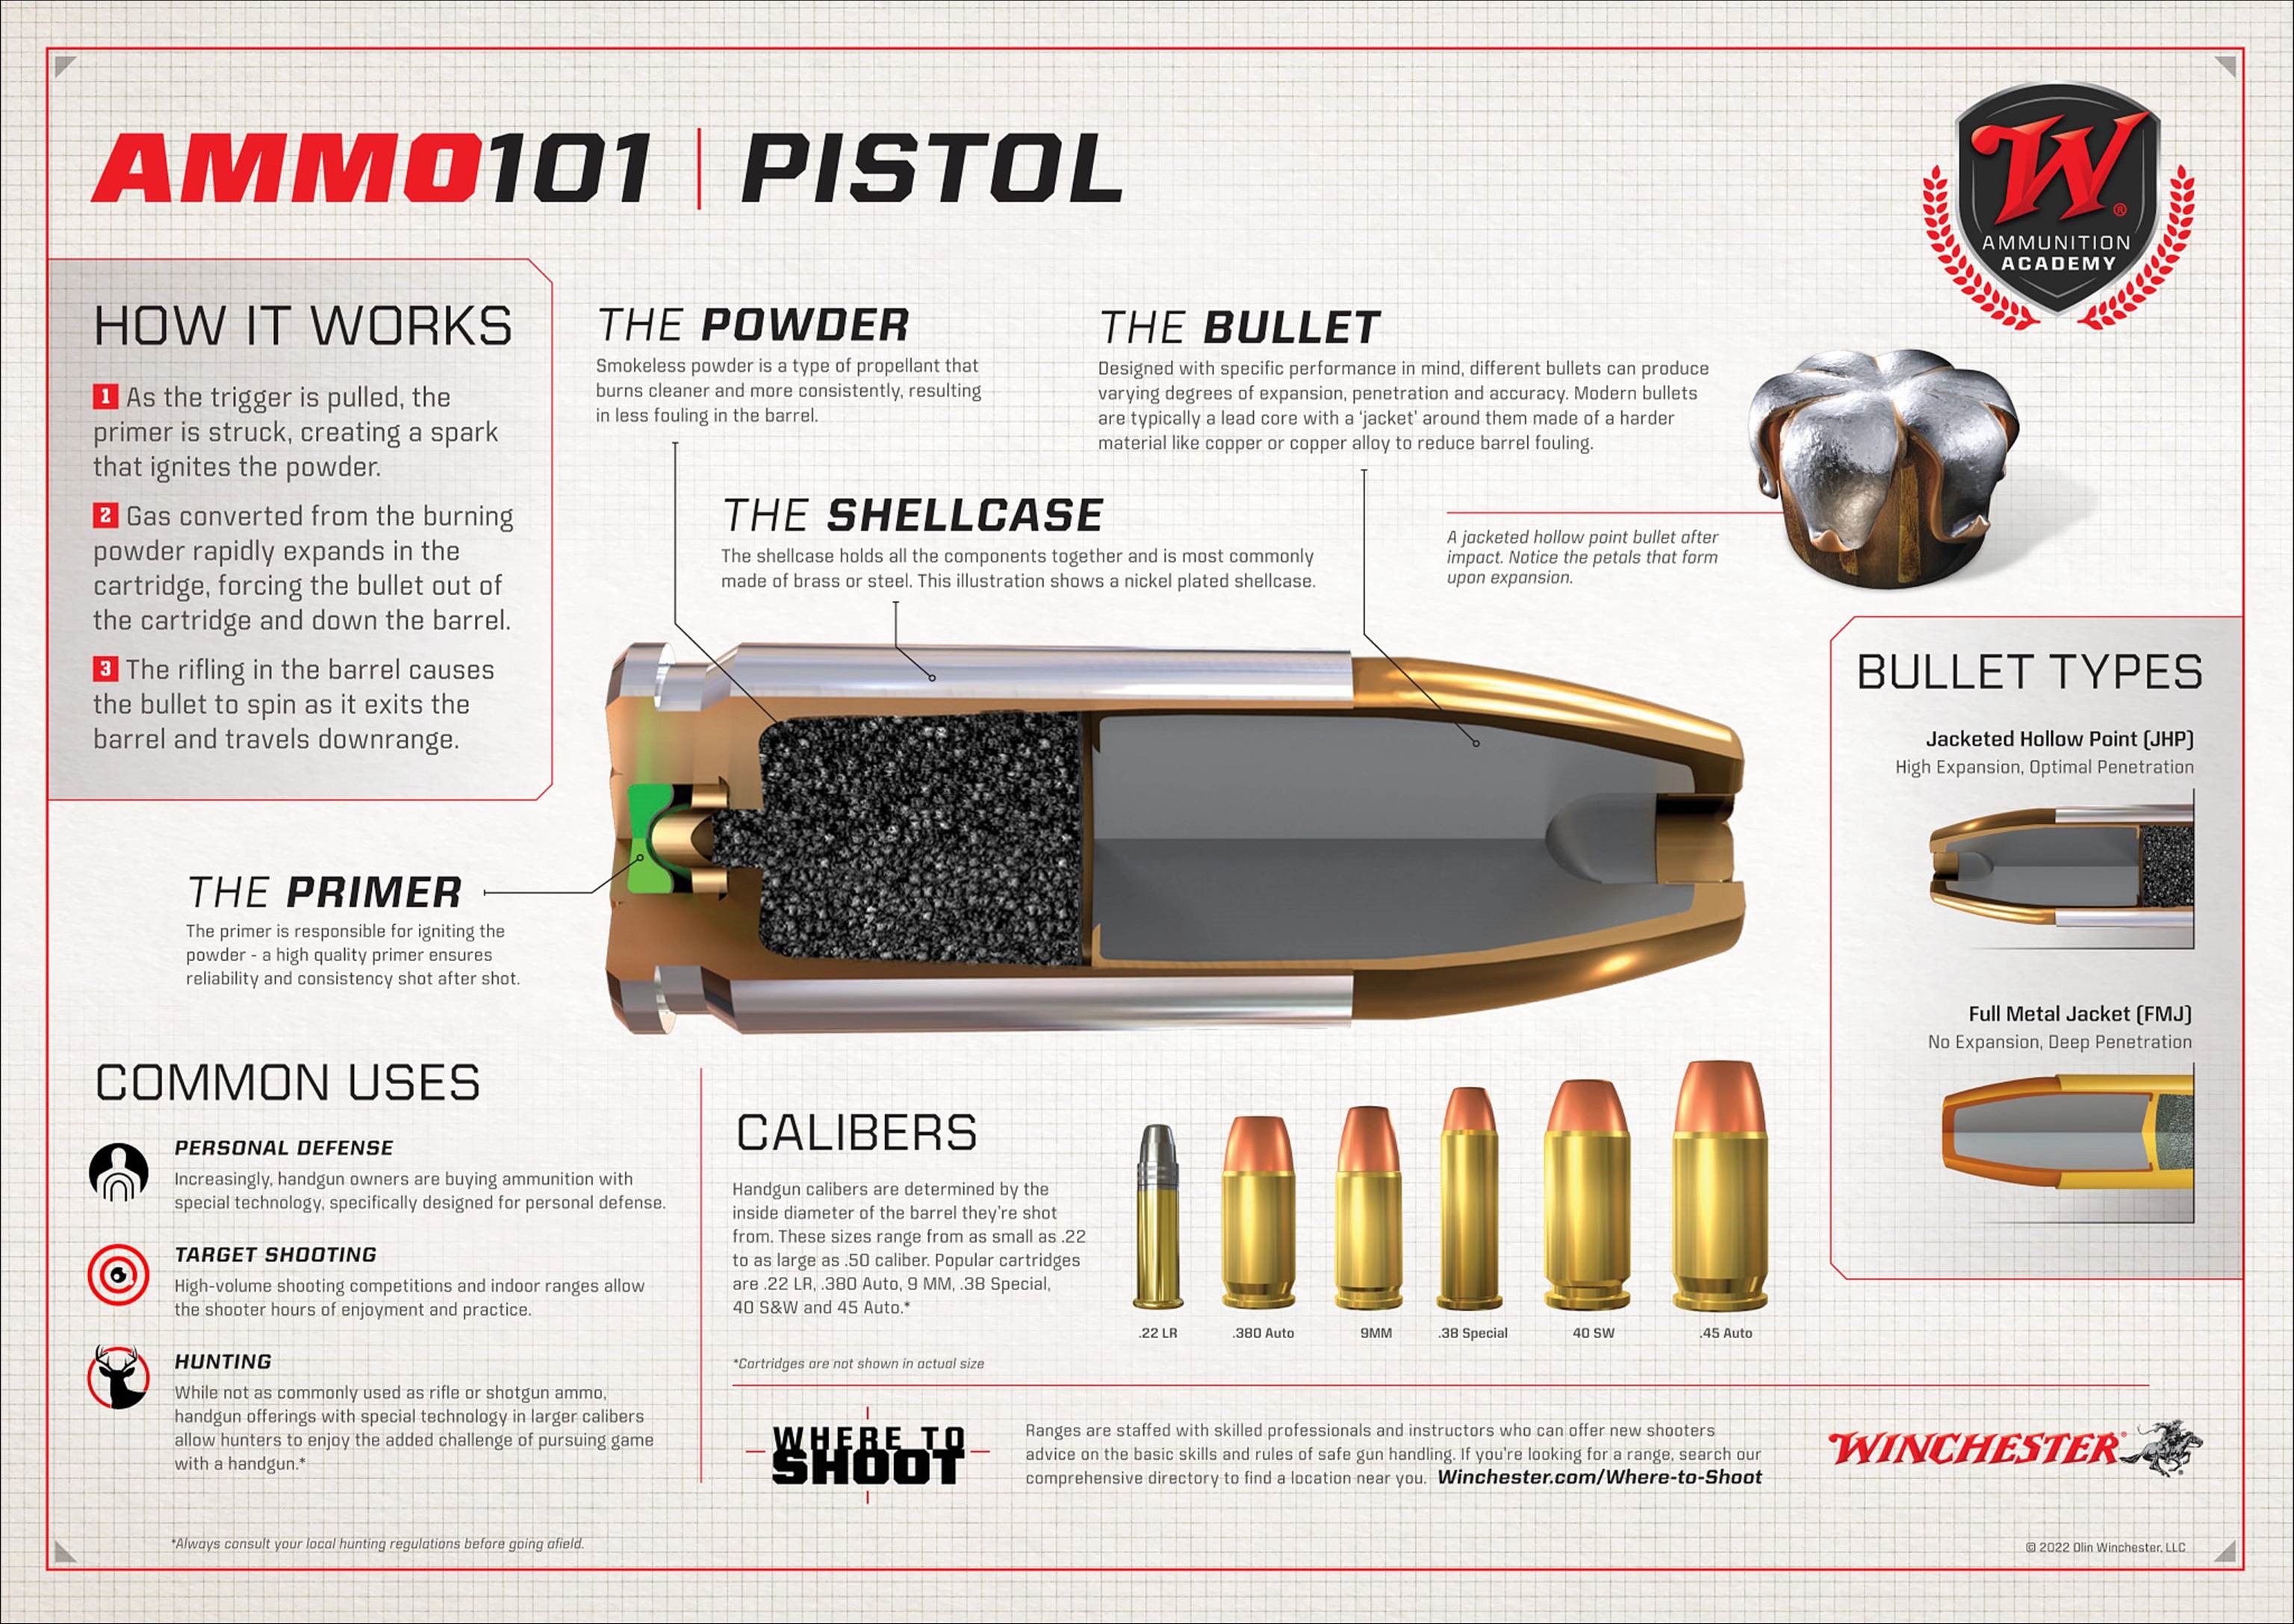 Image of the inner working of pistol ammunition